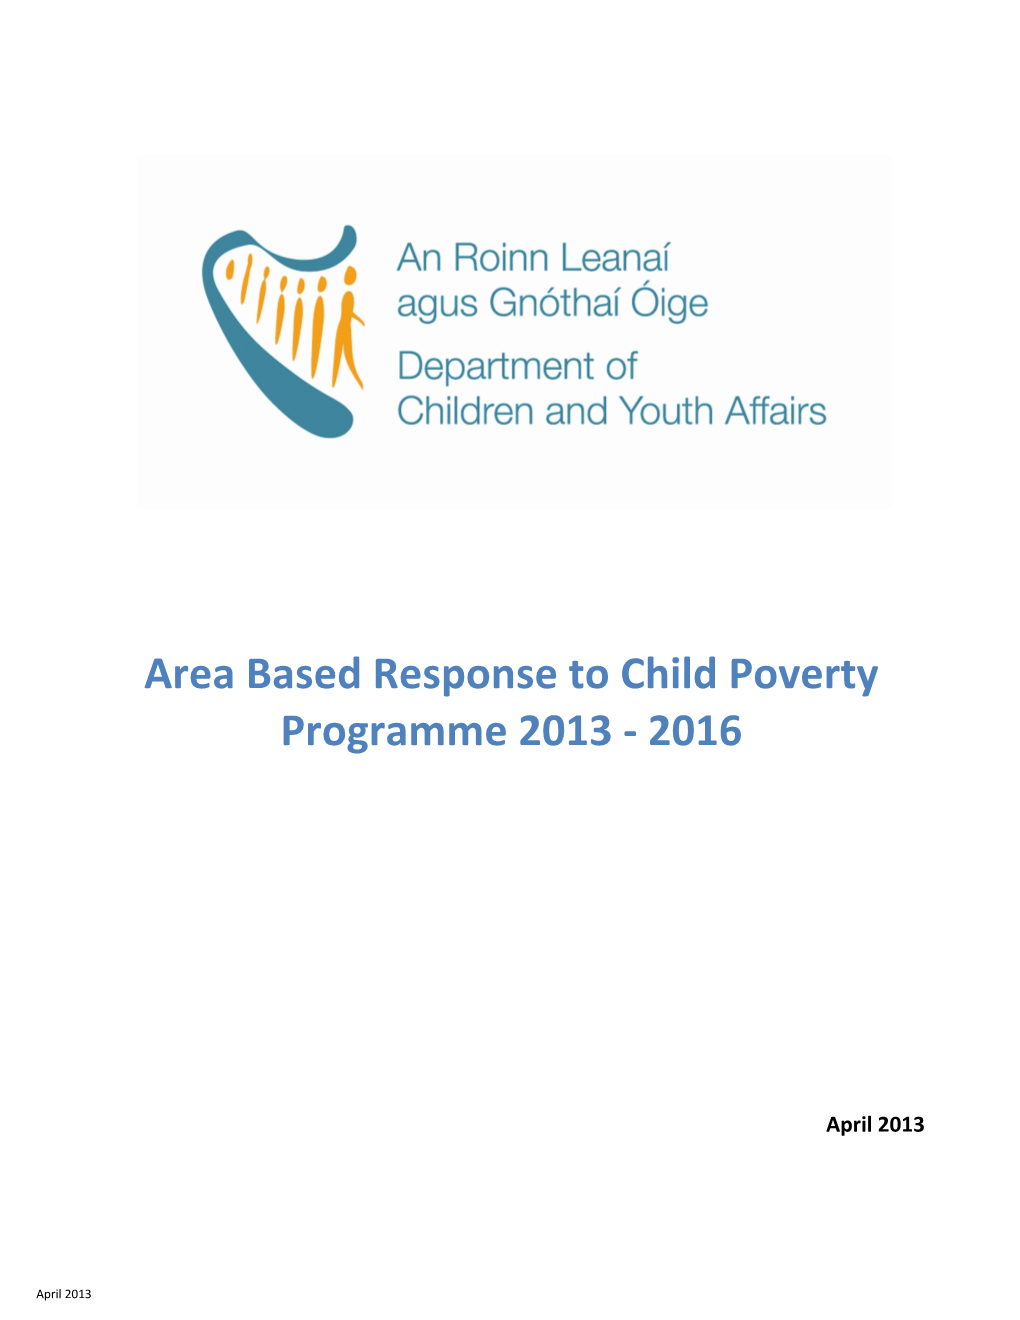 Area Based Response to Child Poverty Programme 2013 - 2016